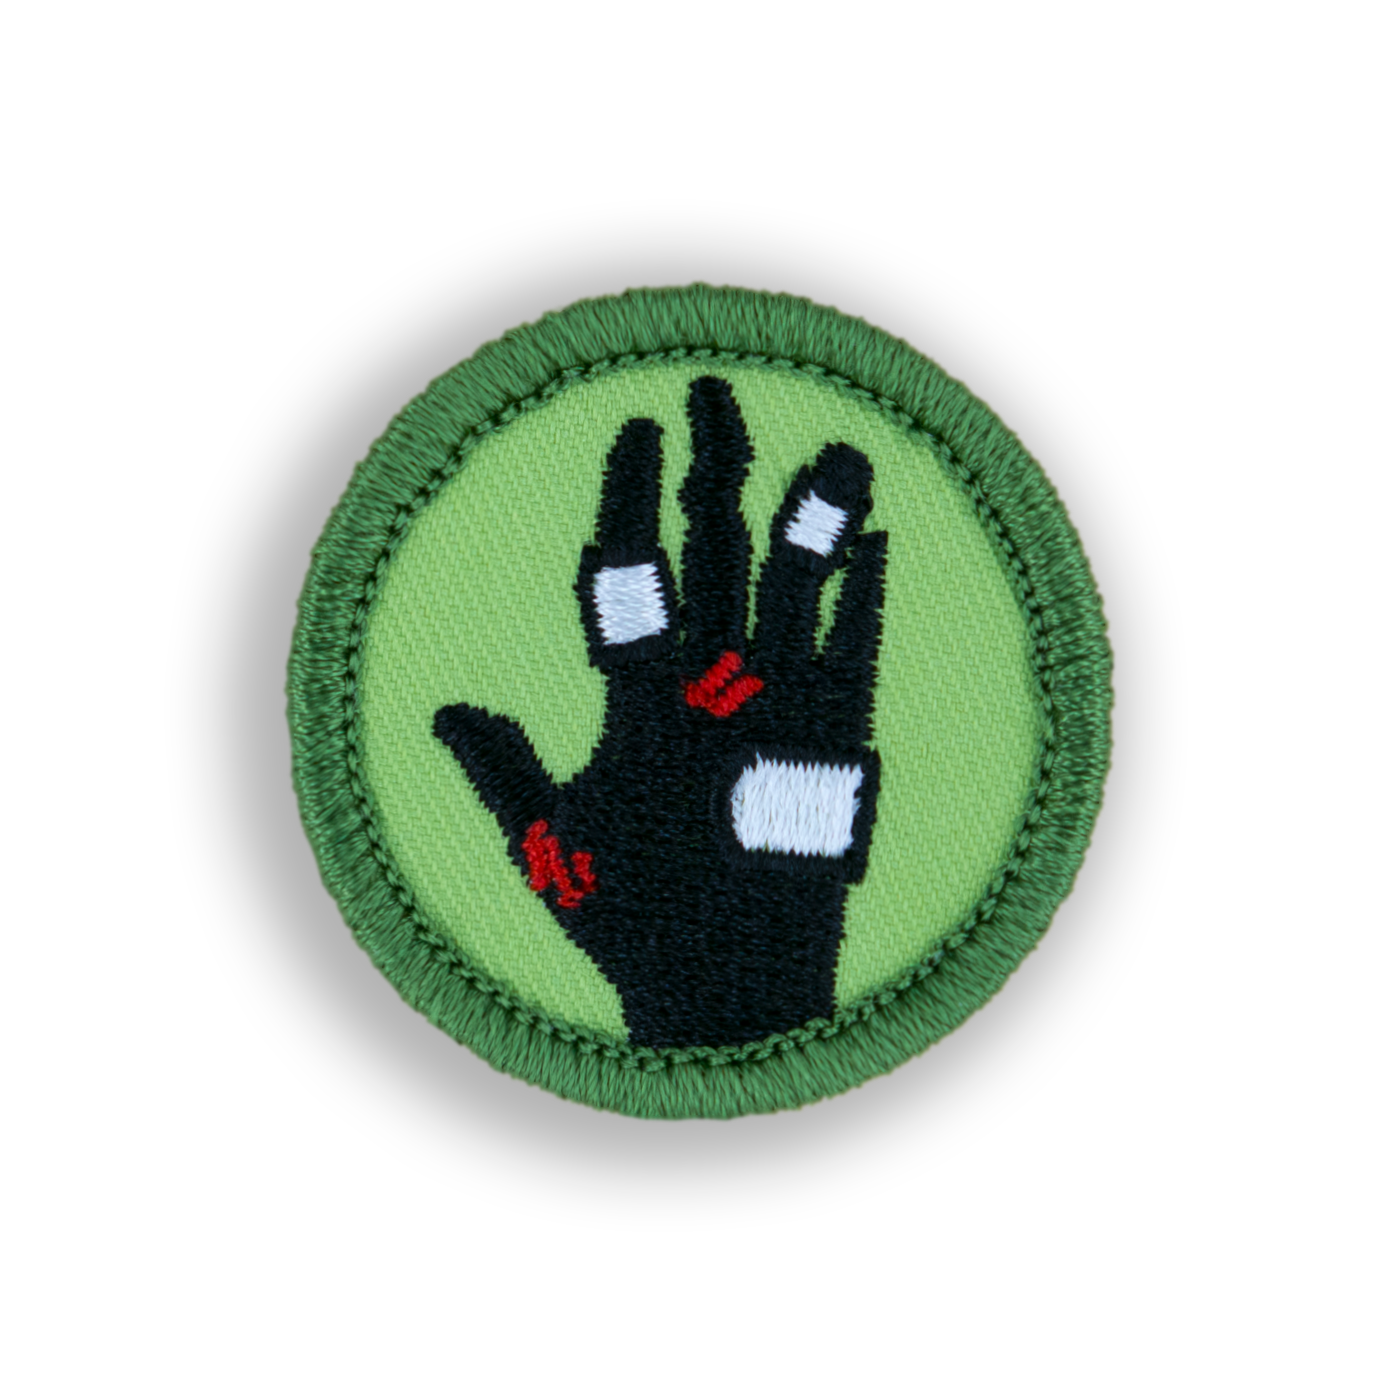 Climber Hands Patch | Demerit Wear - Fake Merit Badges